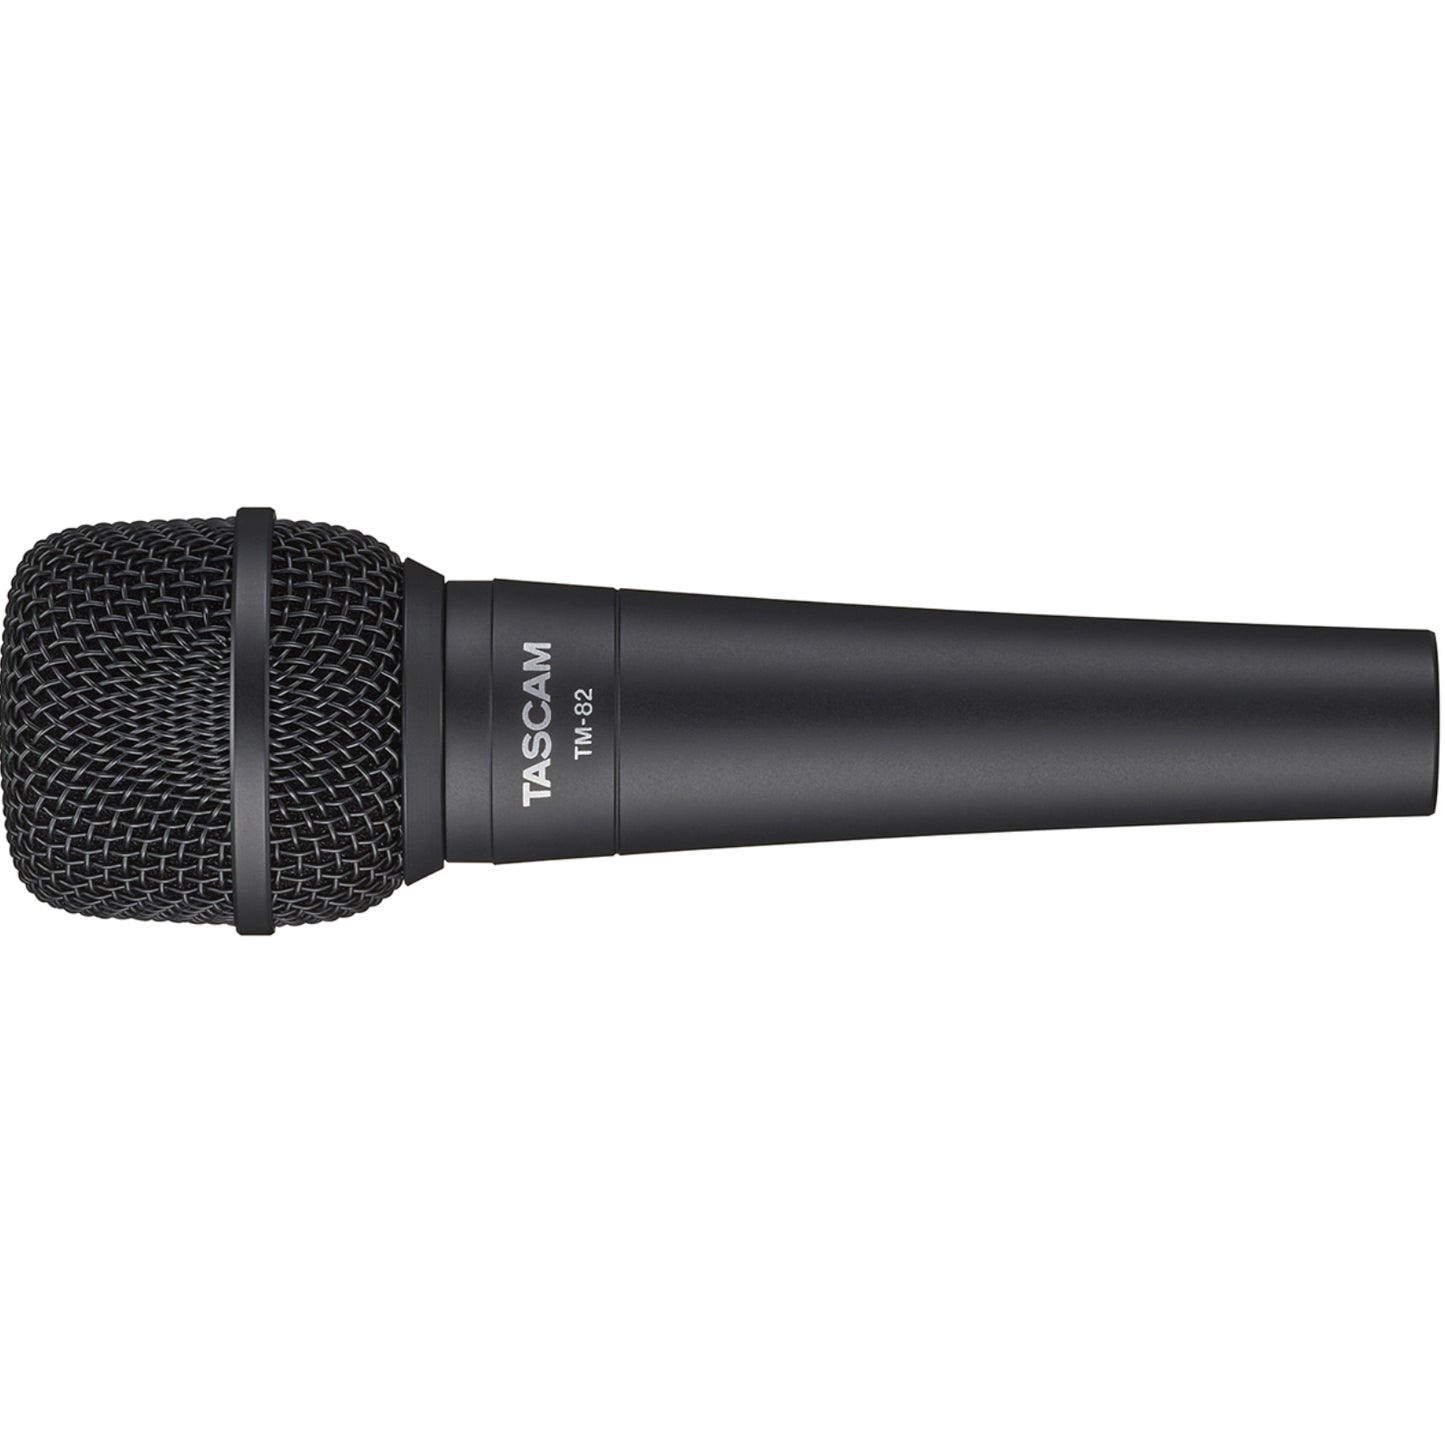 Tascam TM-82 Dynamic Microphone - MyMobile